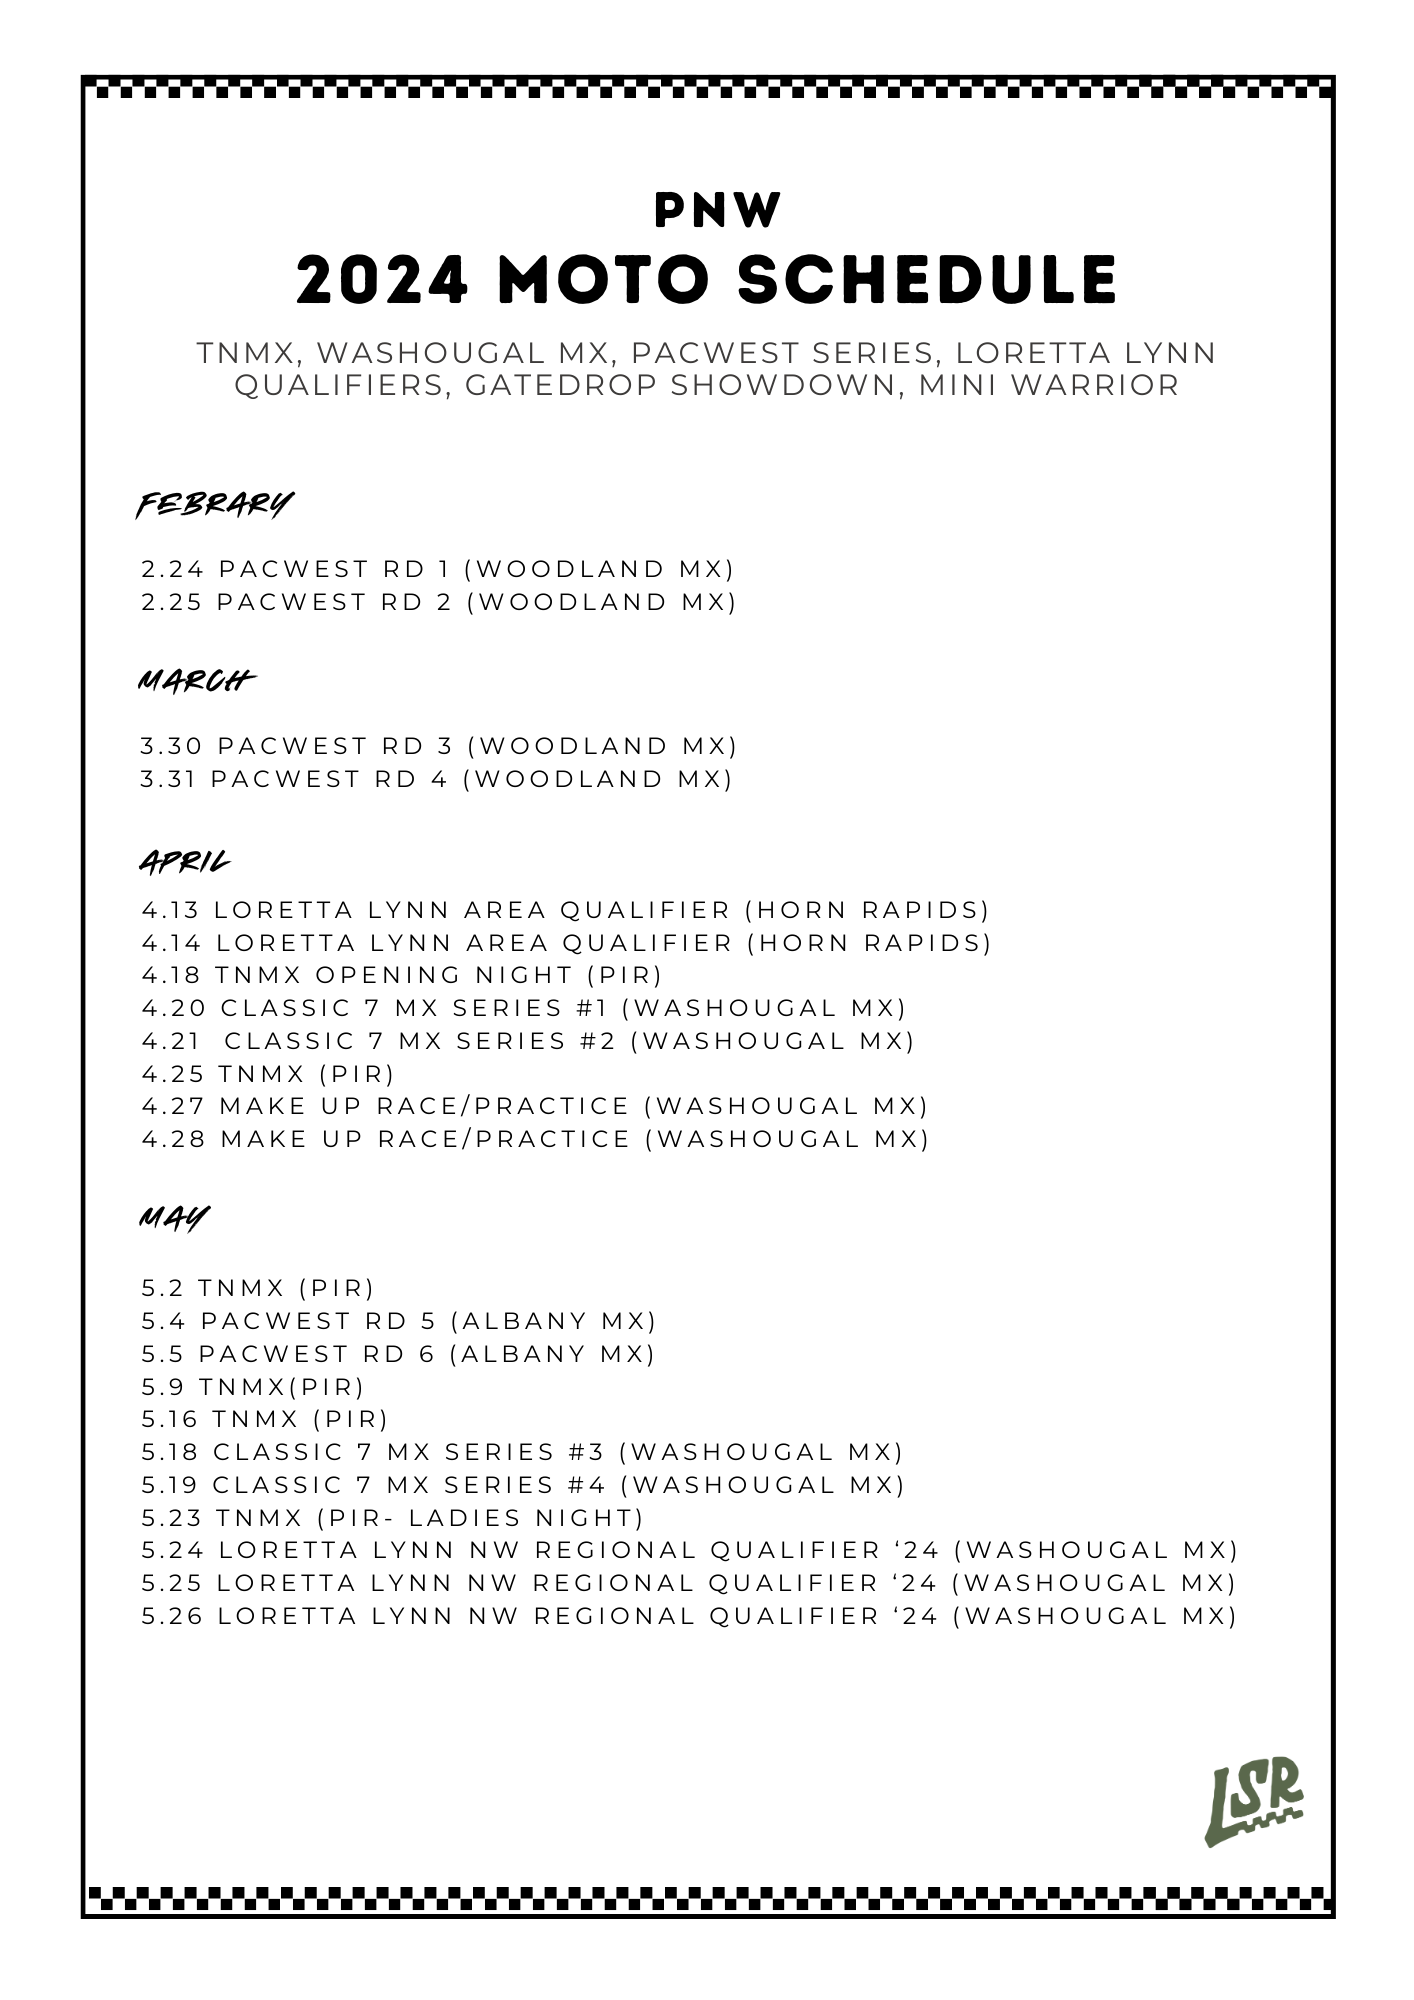 2024 PNW Moto Schedule -  FREE Digital Download